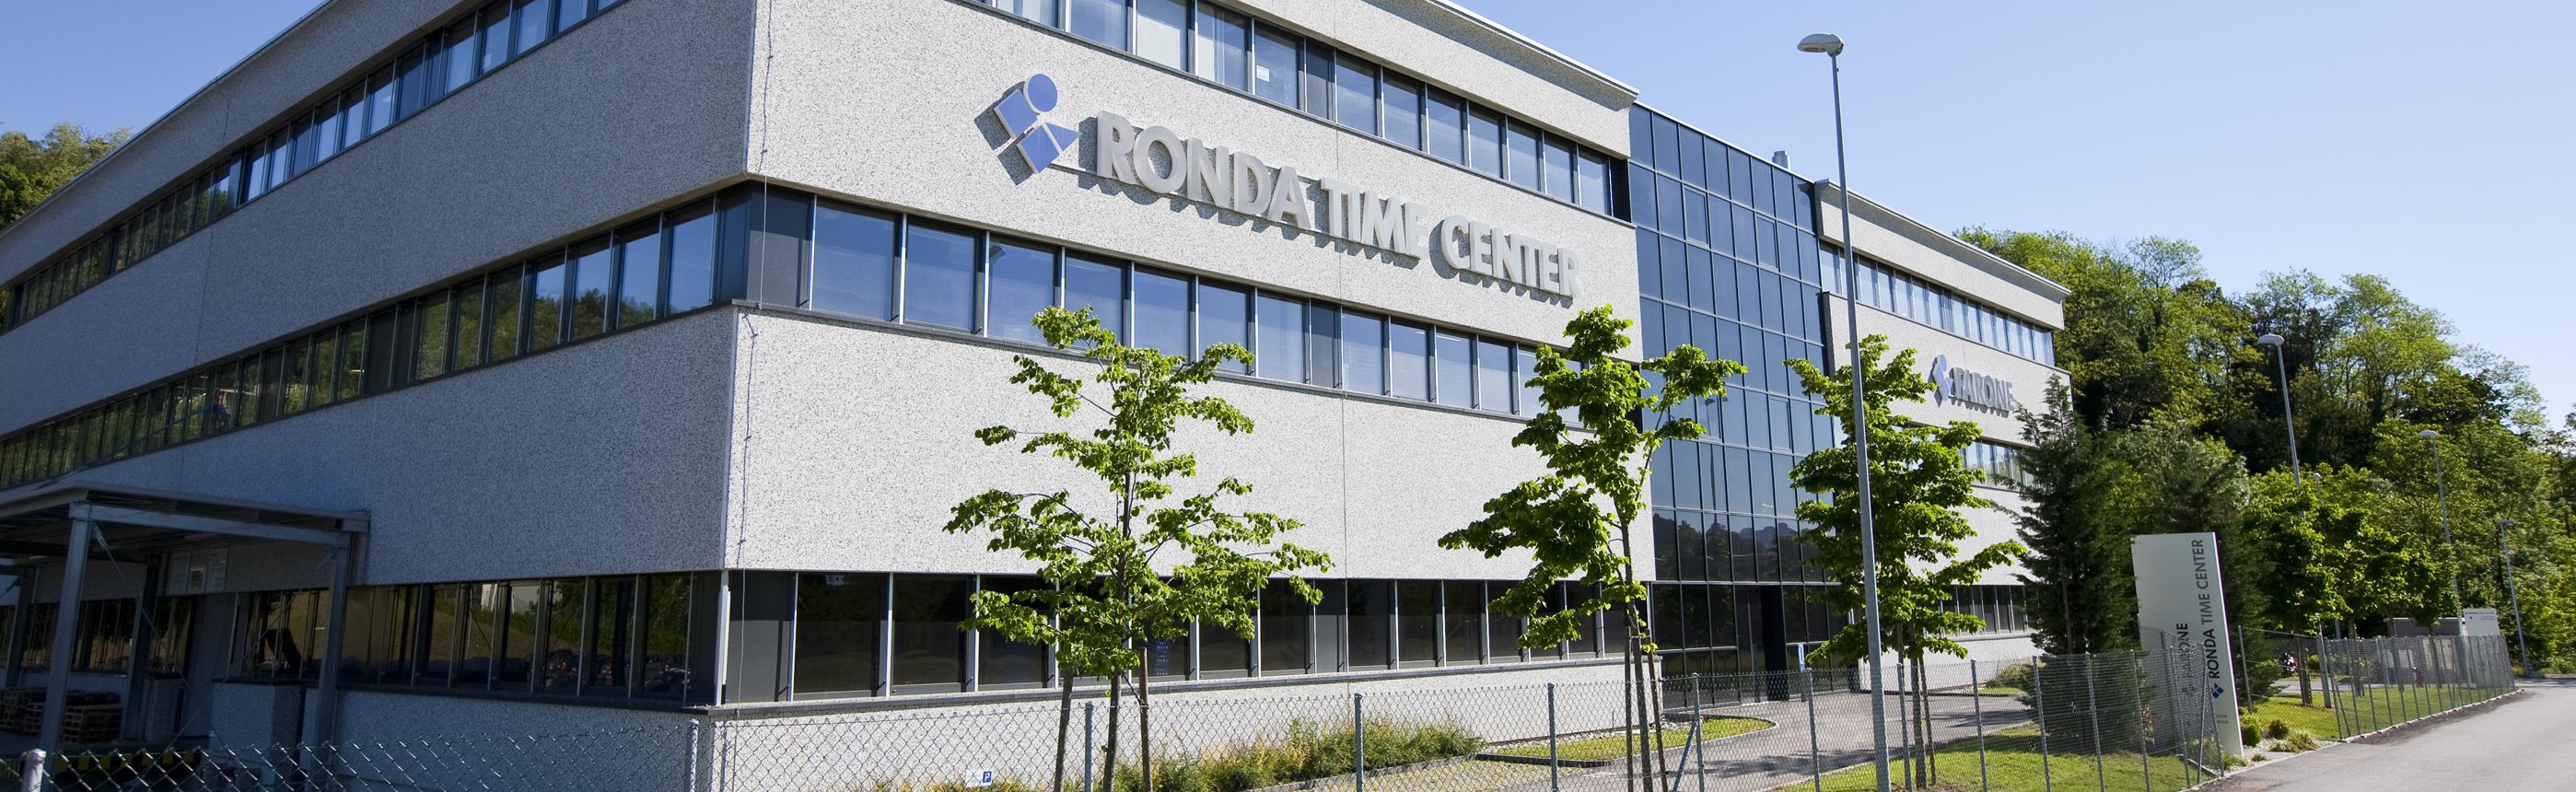 Headquarters of Ronda Time Center in Stabio / Switzerland